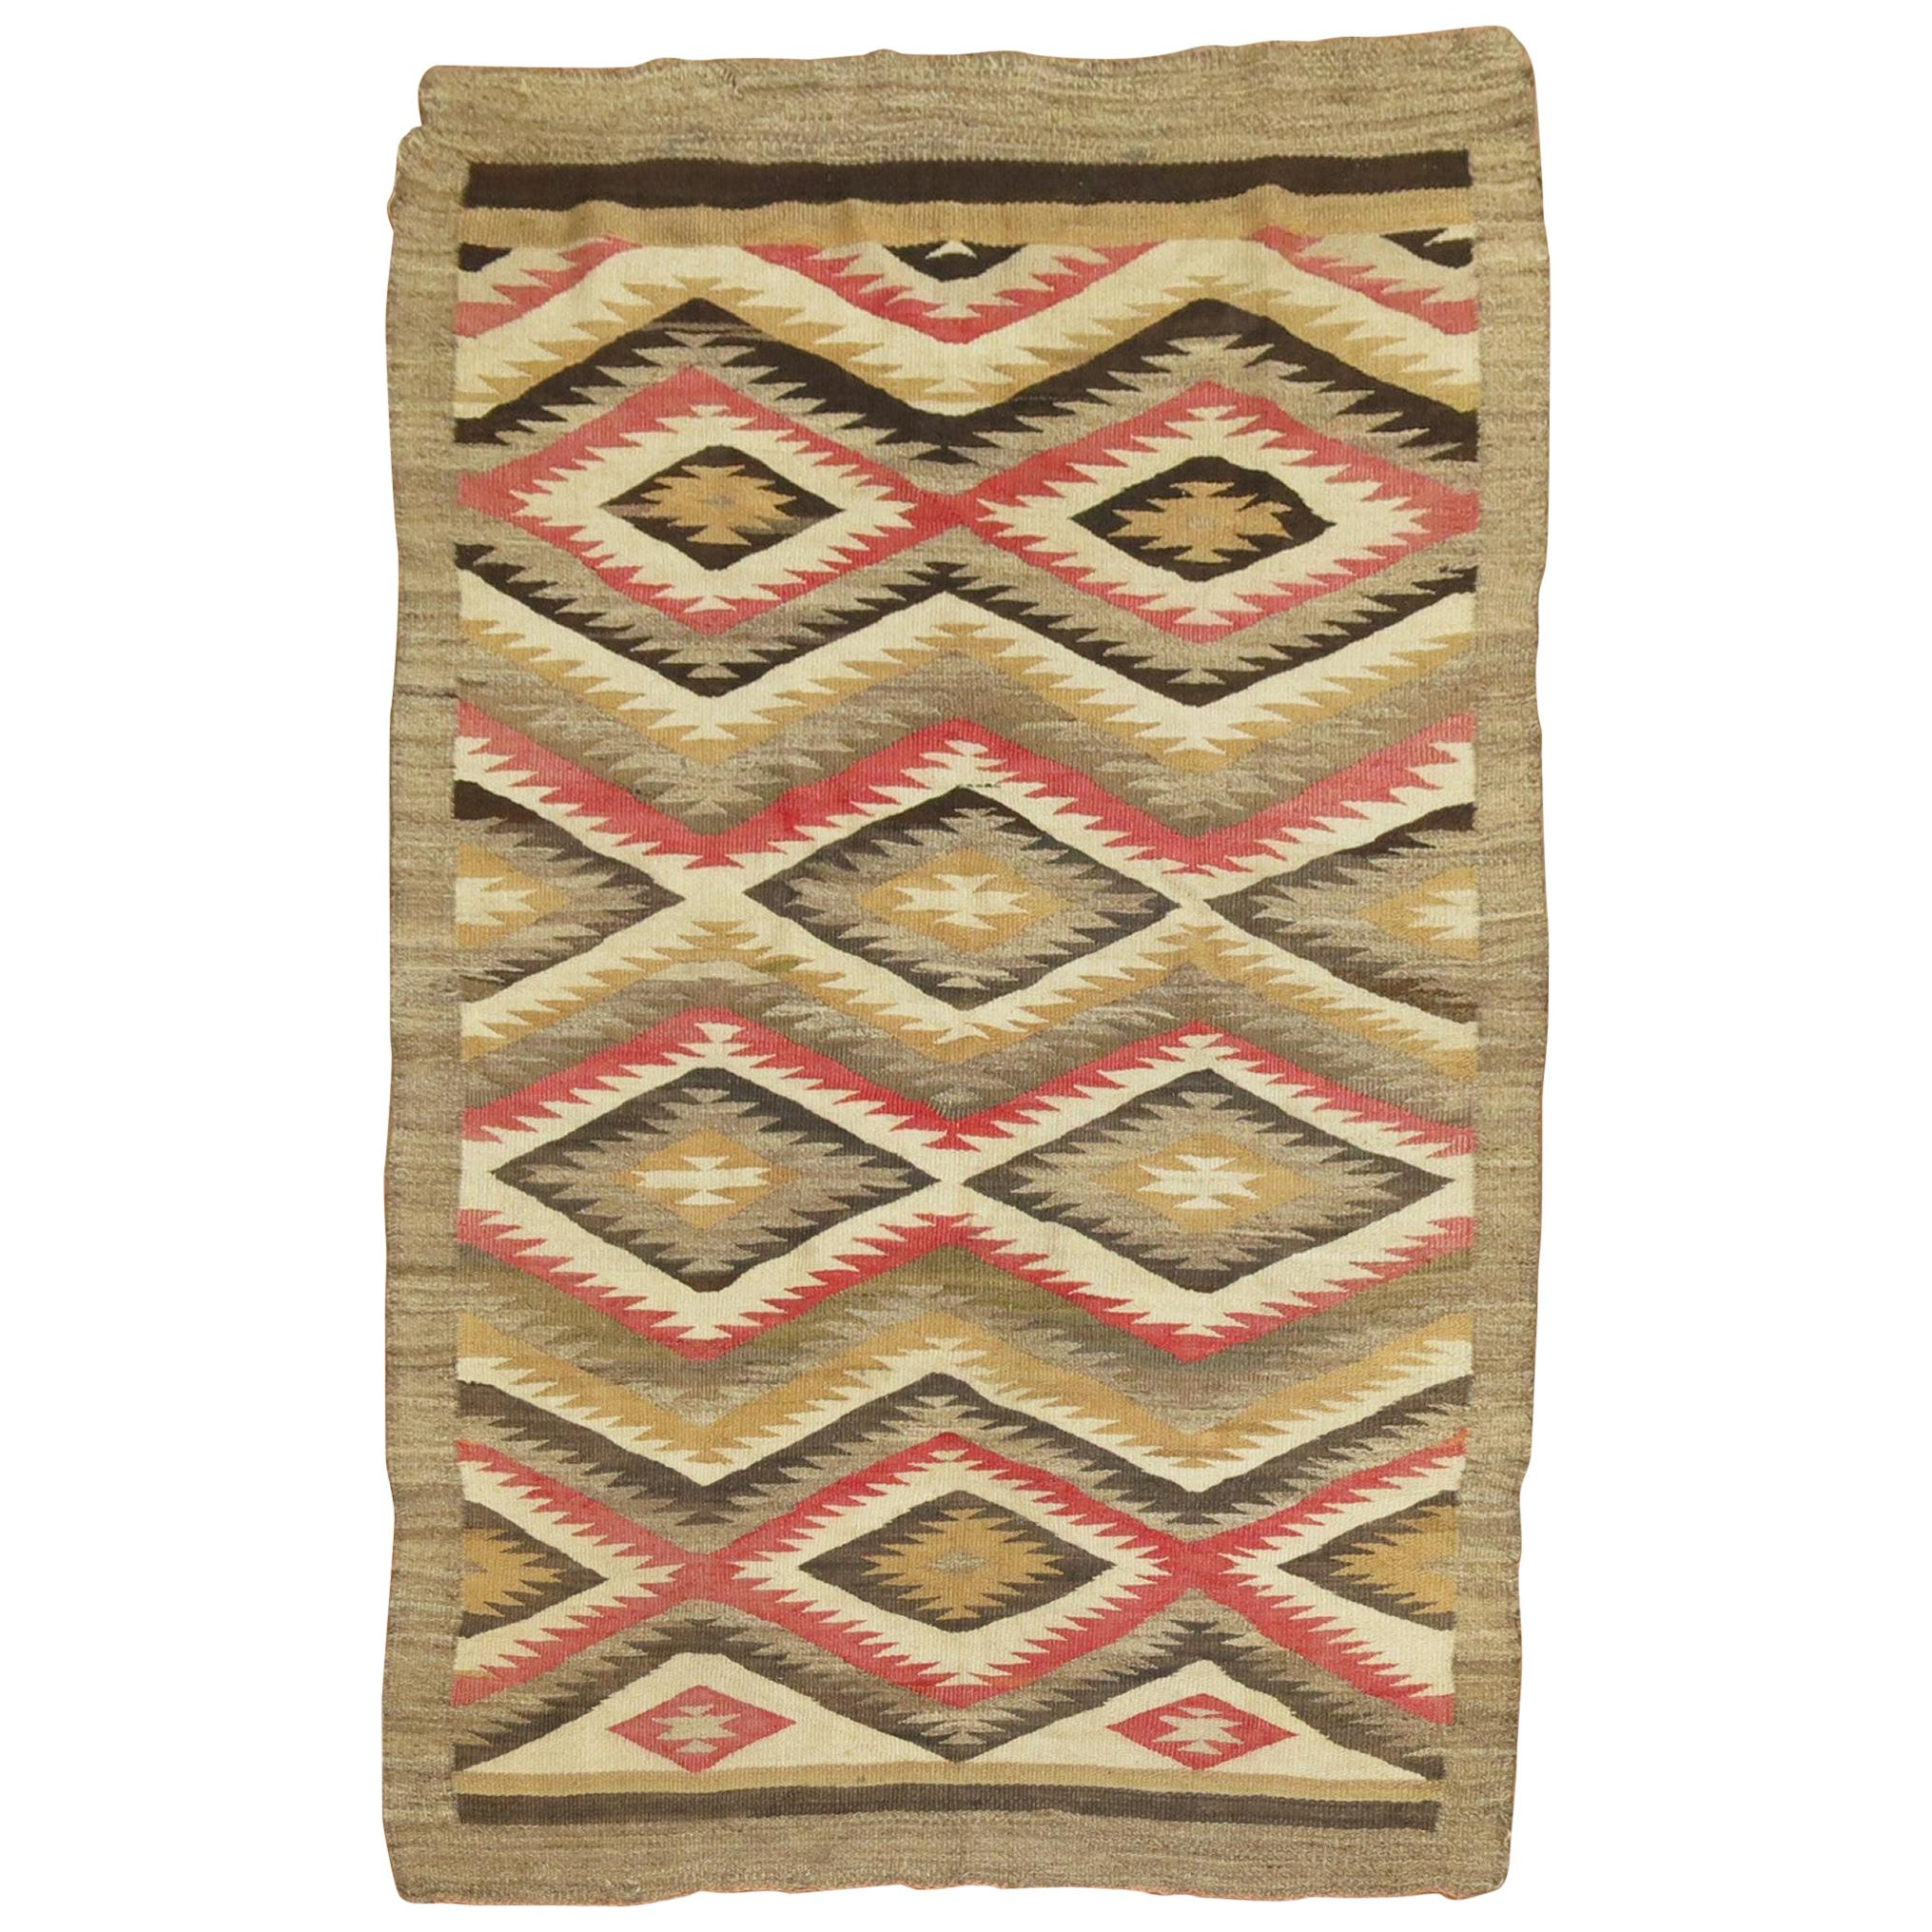 Tribal Geometric Primitive Camel Field Antique American Navajo Rug For Sale